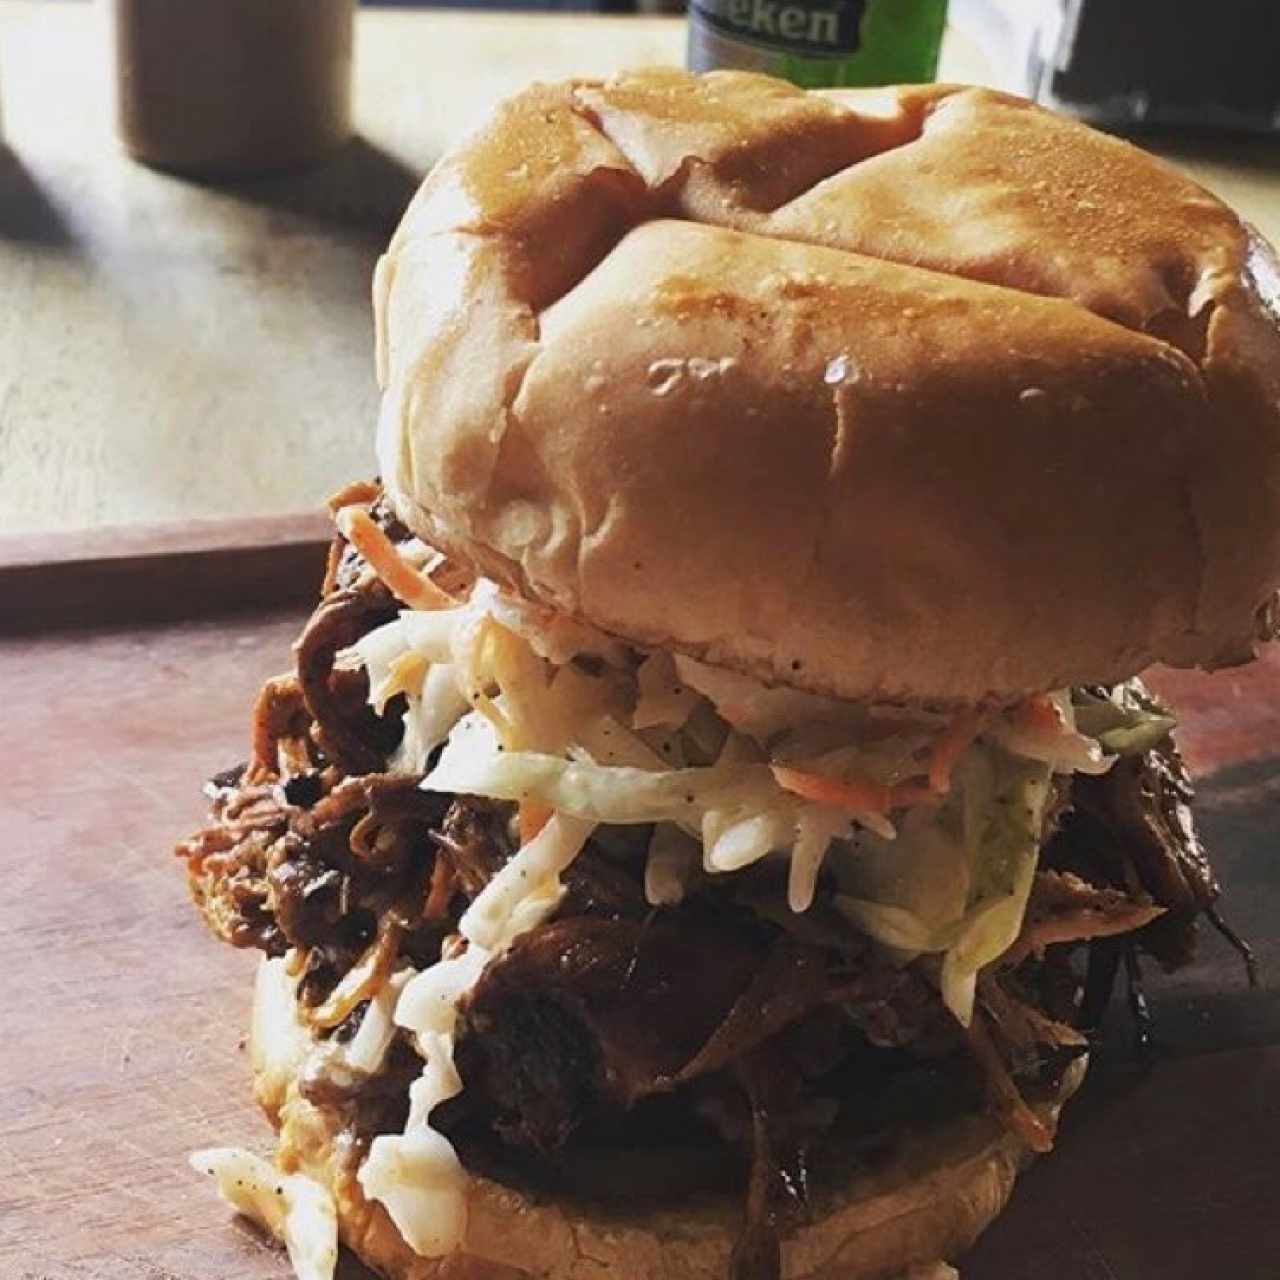 Sandwich - The Texas Bugkle